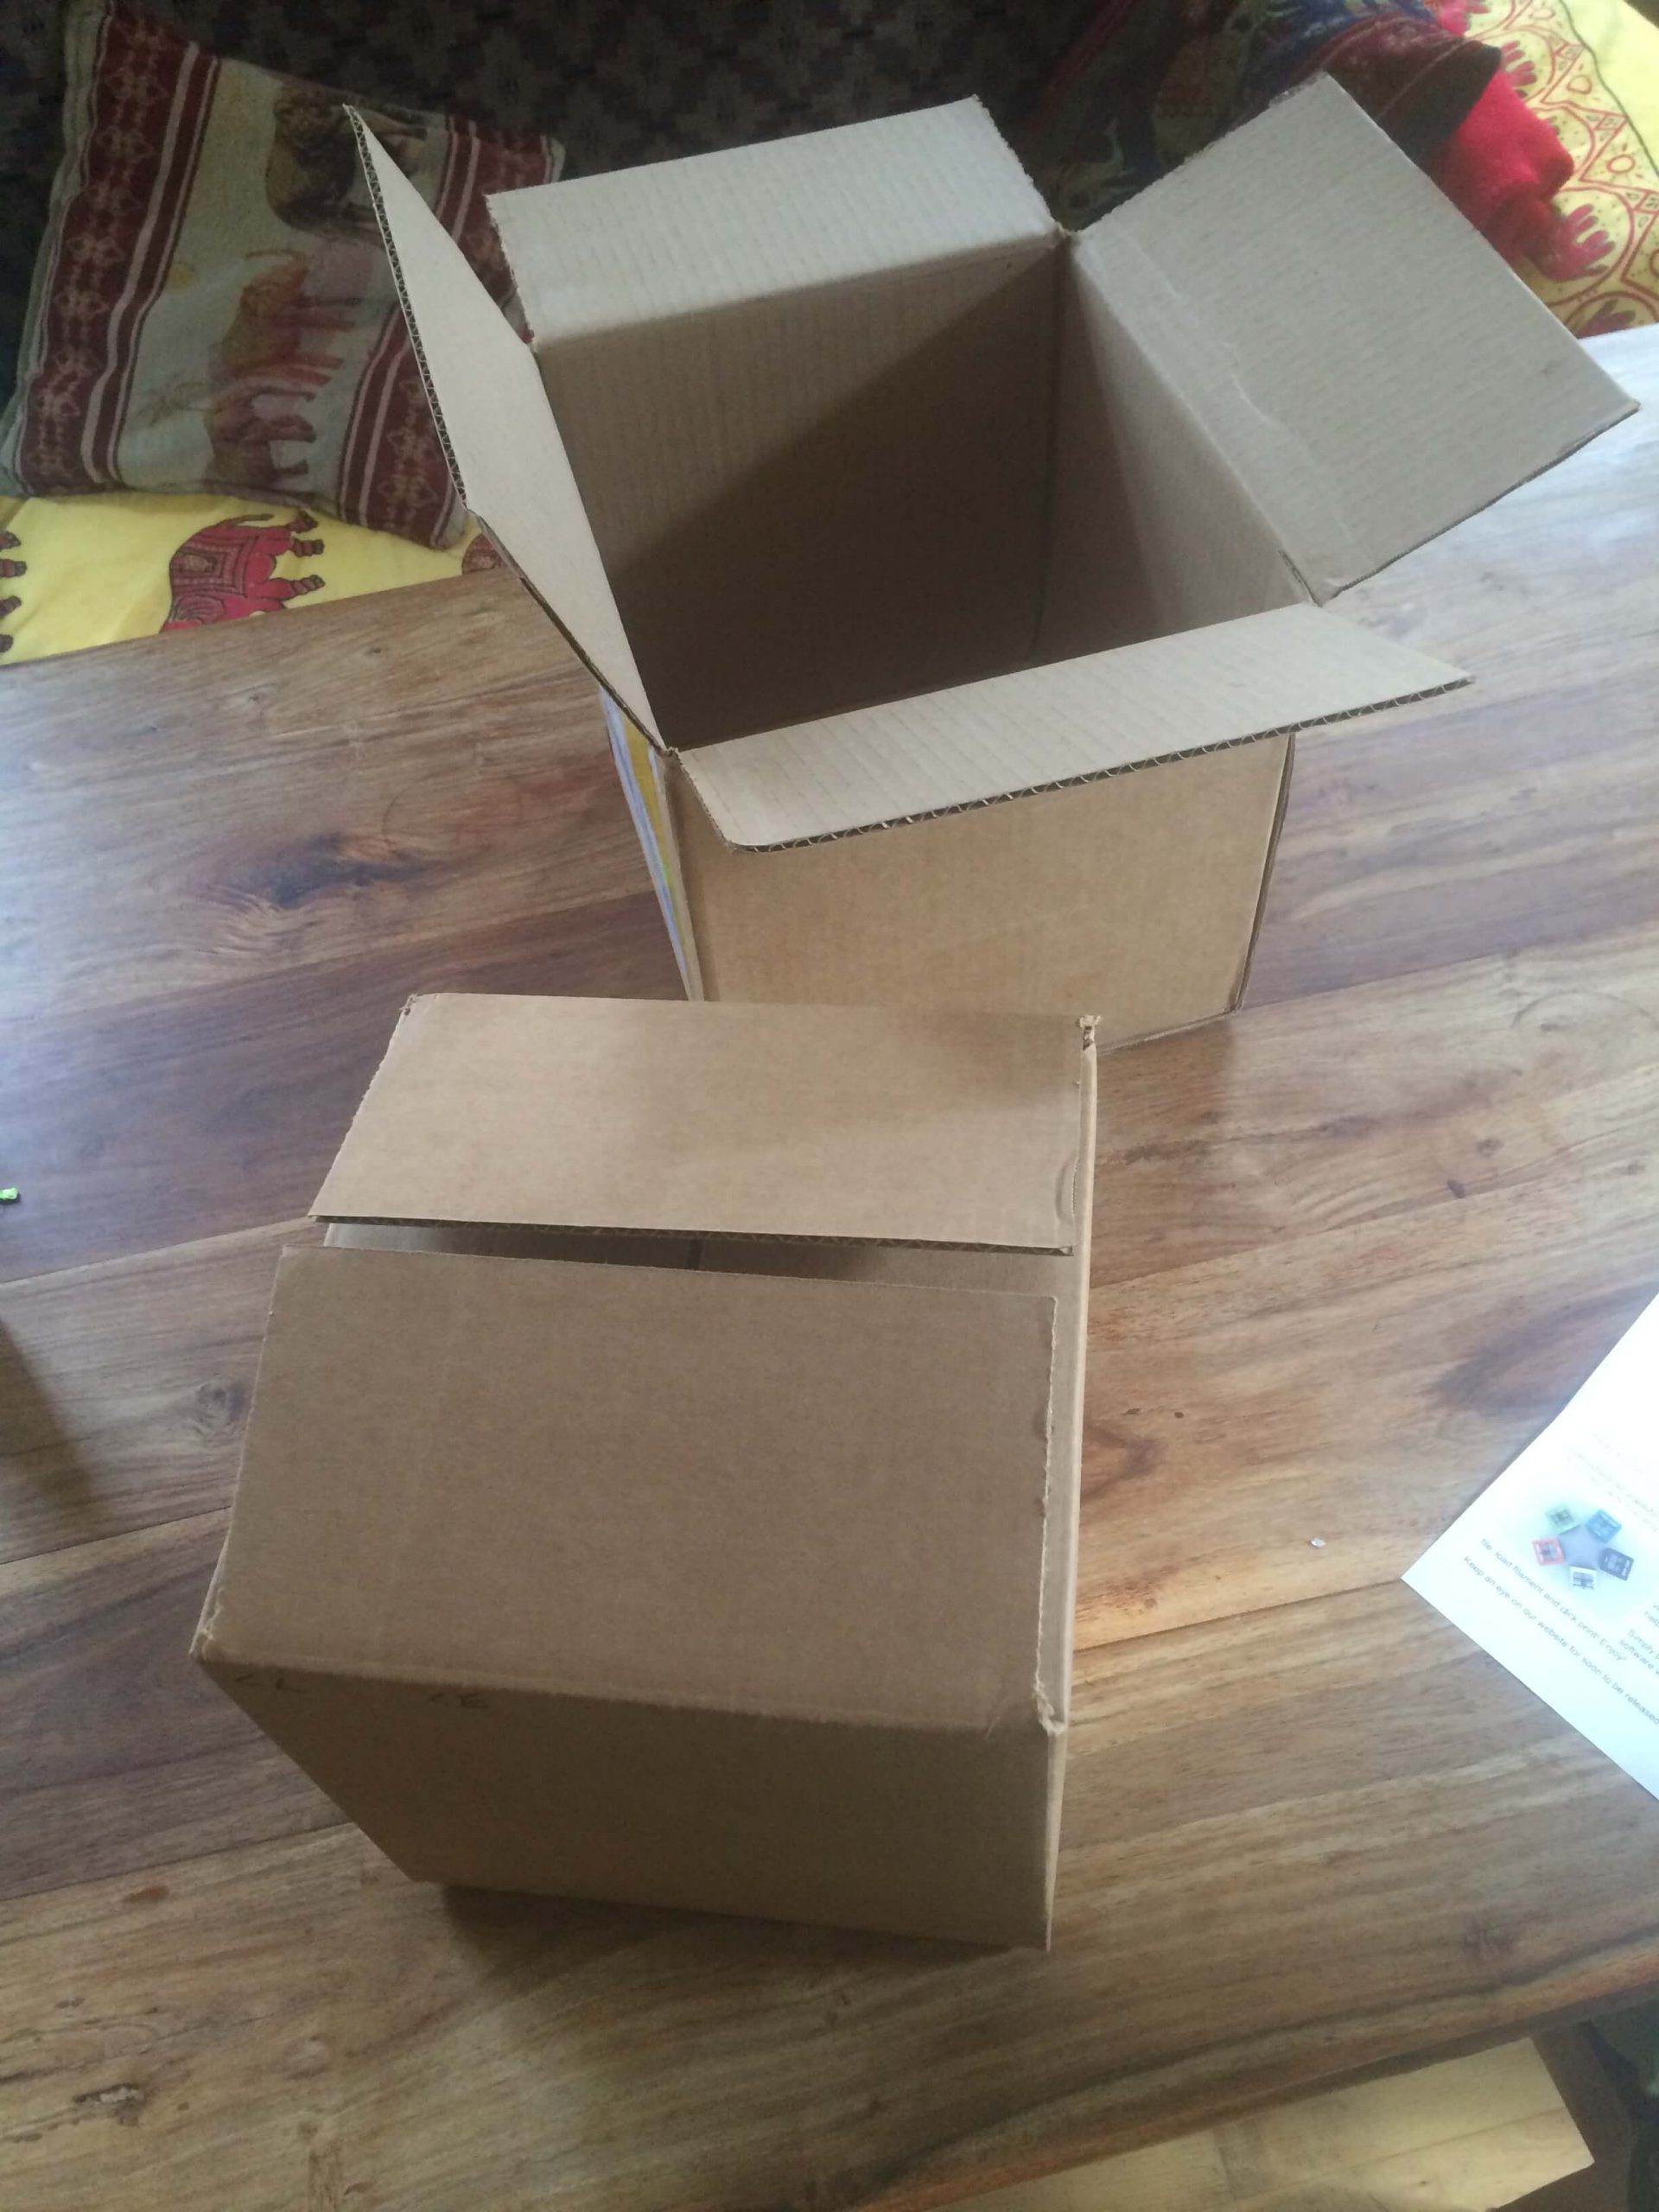 The M3D - box in a box